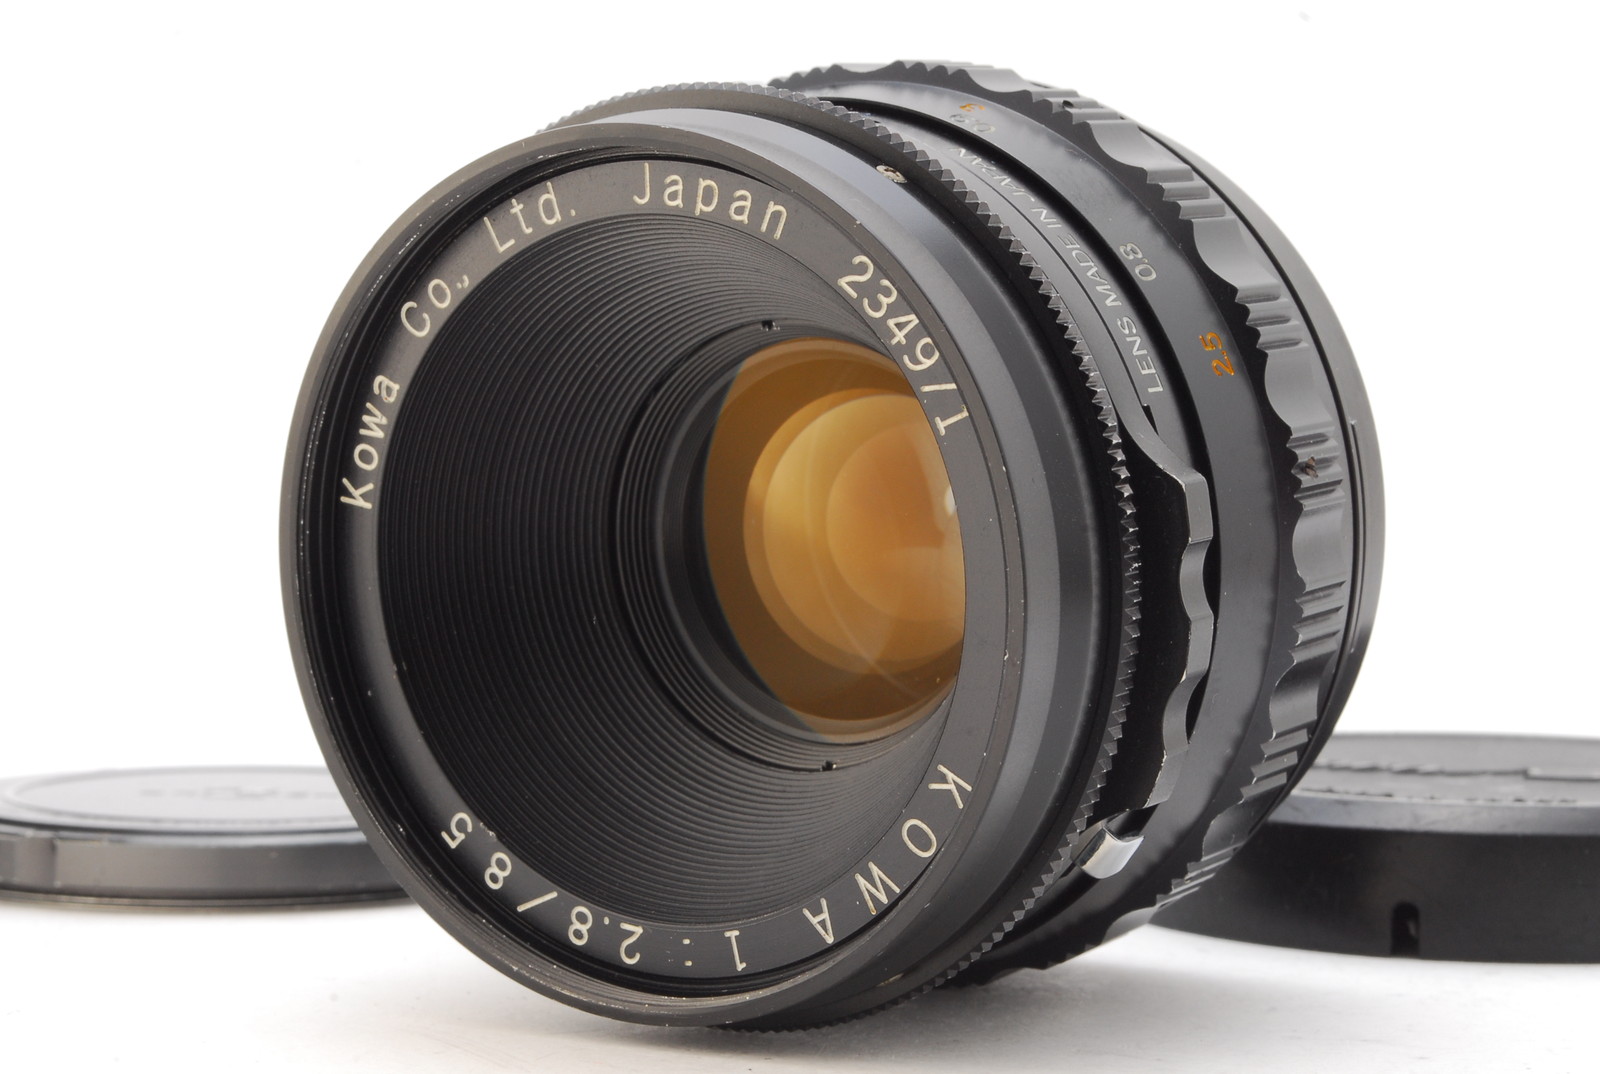 PROMOTION. EXC+4 KOWA 85mm f/2.8 untuk Kanta Hitam Kowa SIX, Penutup Depan, Penutup Belakang dari Jepun EXC+4 KOWA 85mm f/2.8 for Kowa SIX Black Lens, Front Cap, Rear Cap from Japan